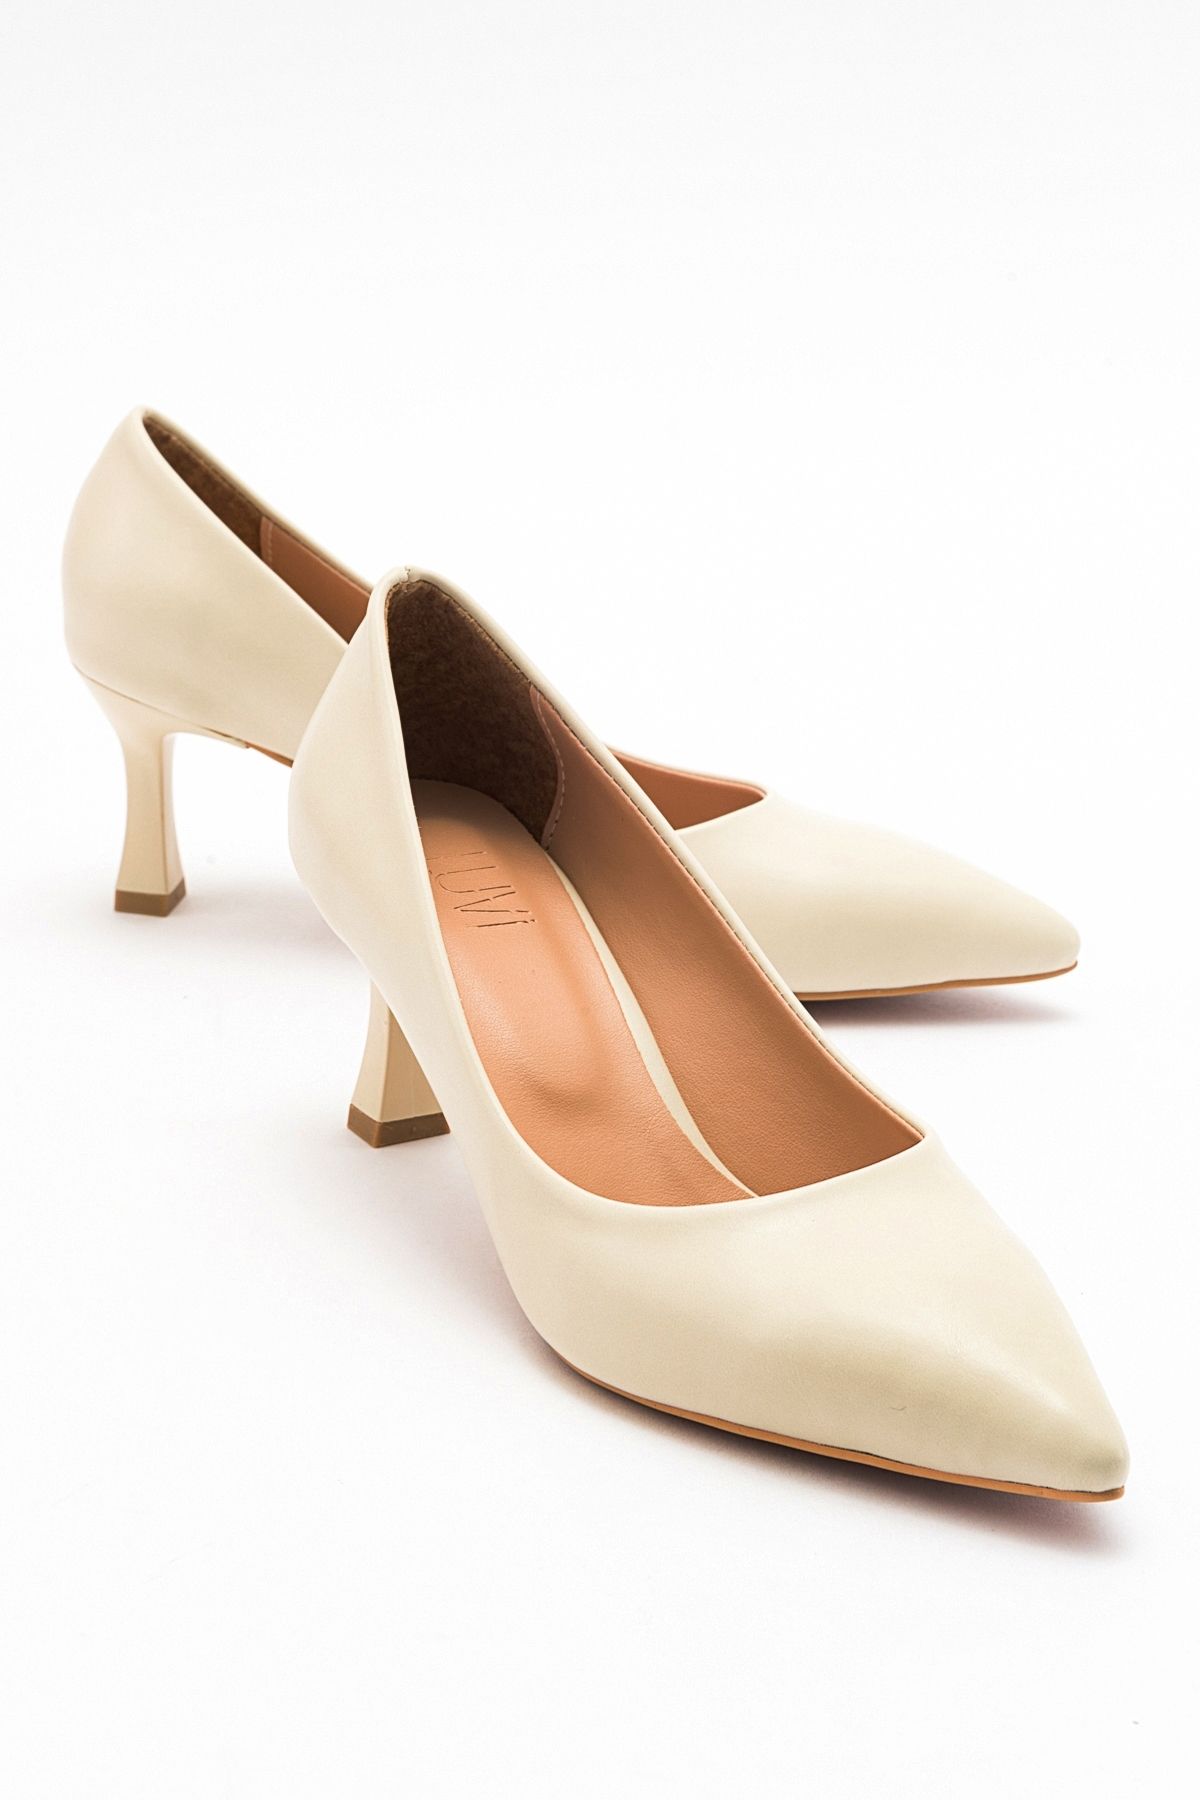 luvishoes PEDRA Ekru-Bej Cilt Kadın Topuklu Ayakkabı